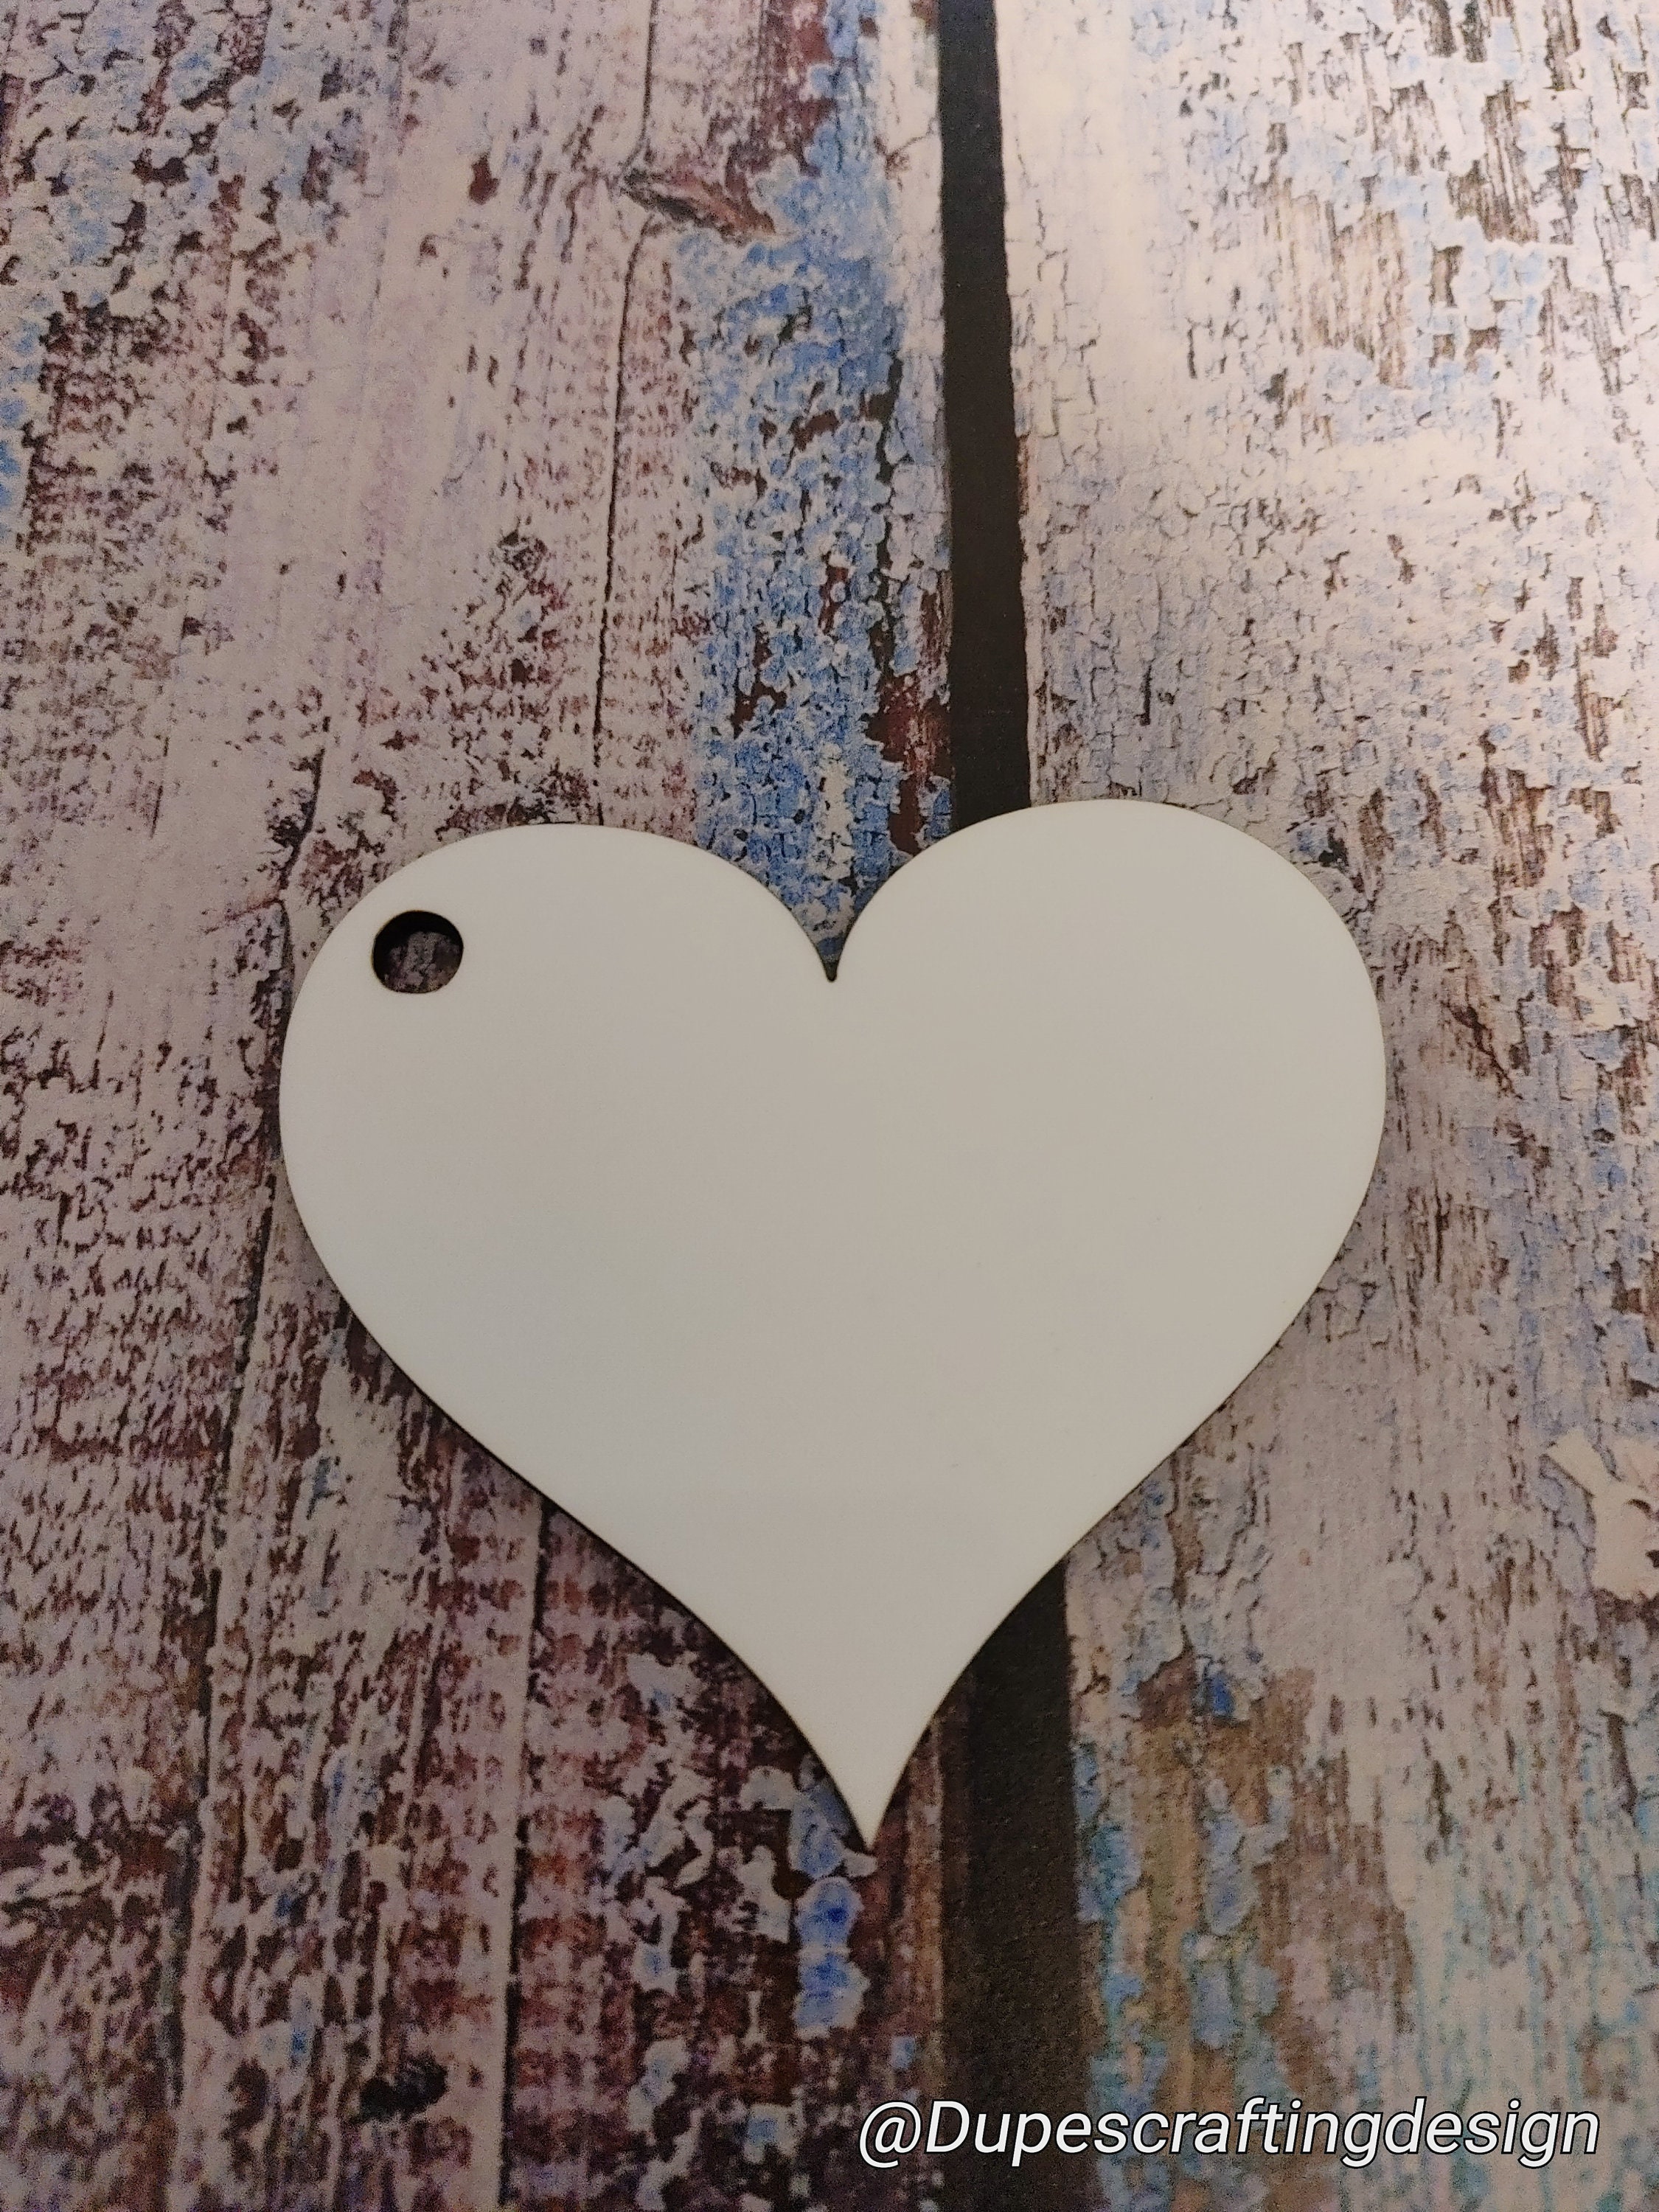 Unisub Sublimation Heart Keychain Blank - 2.5 x 2.25 - 5520 - 100